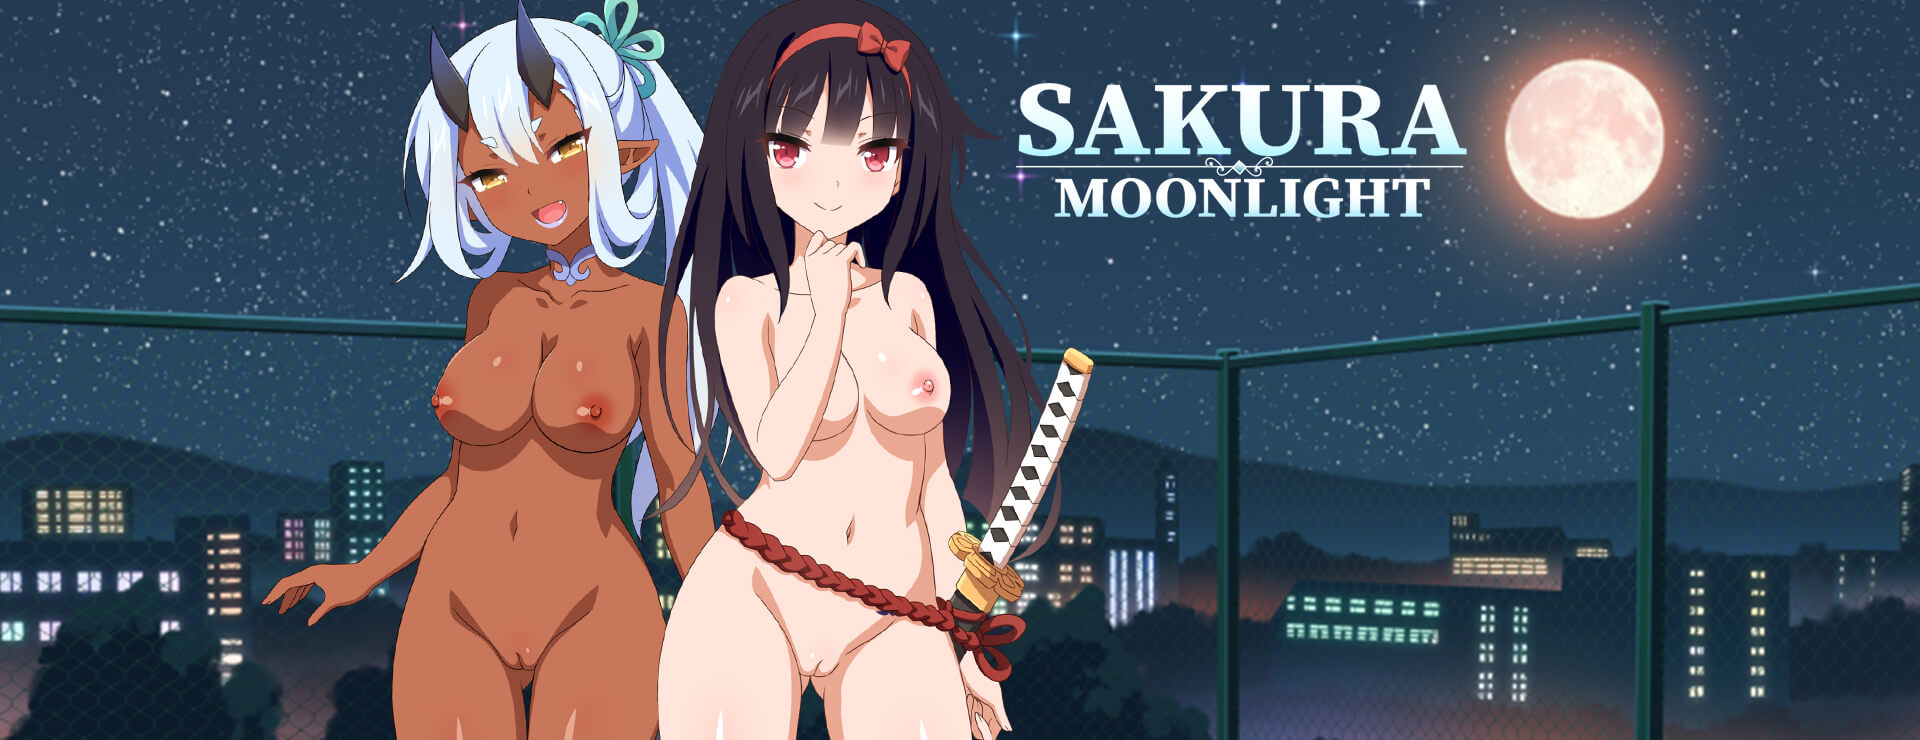 Sakura Moonlight - Japanisches Adventure Spiel